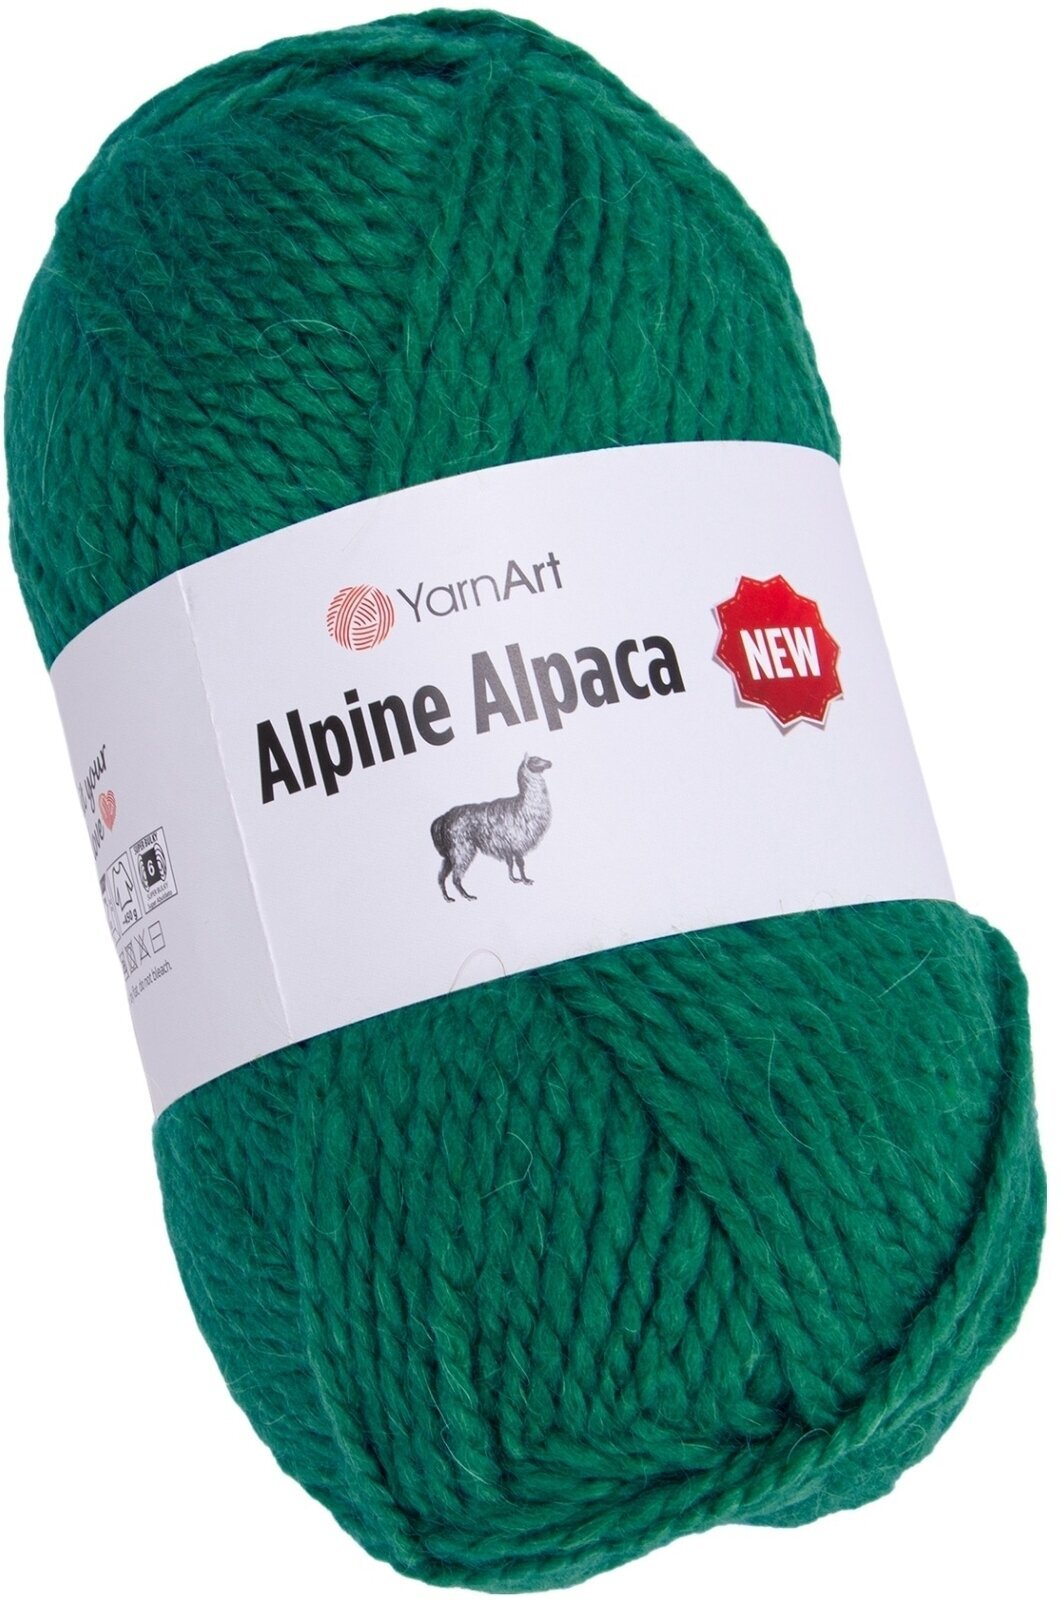 Knitting Yarn Yarn Art Alpine Alpaca 1449